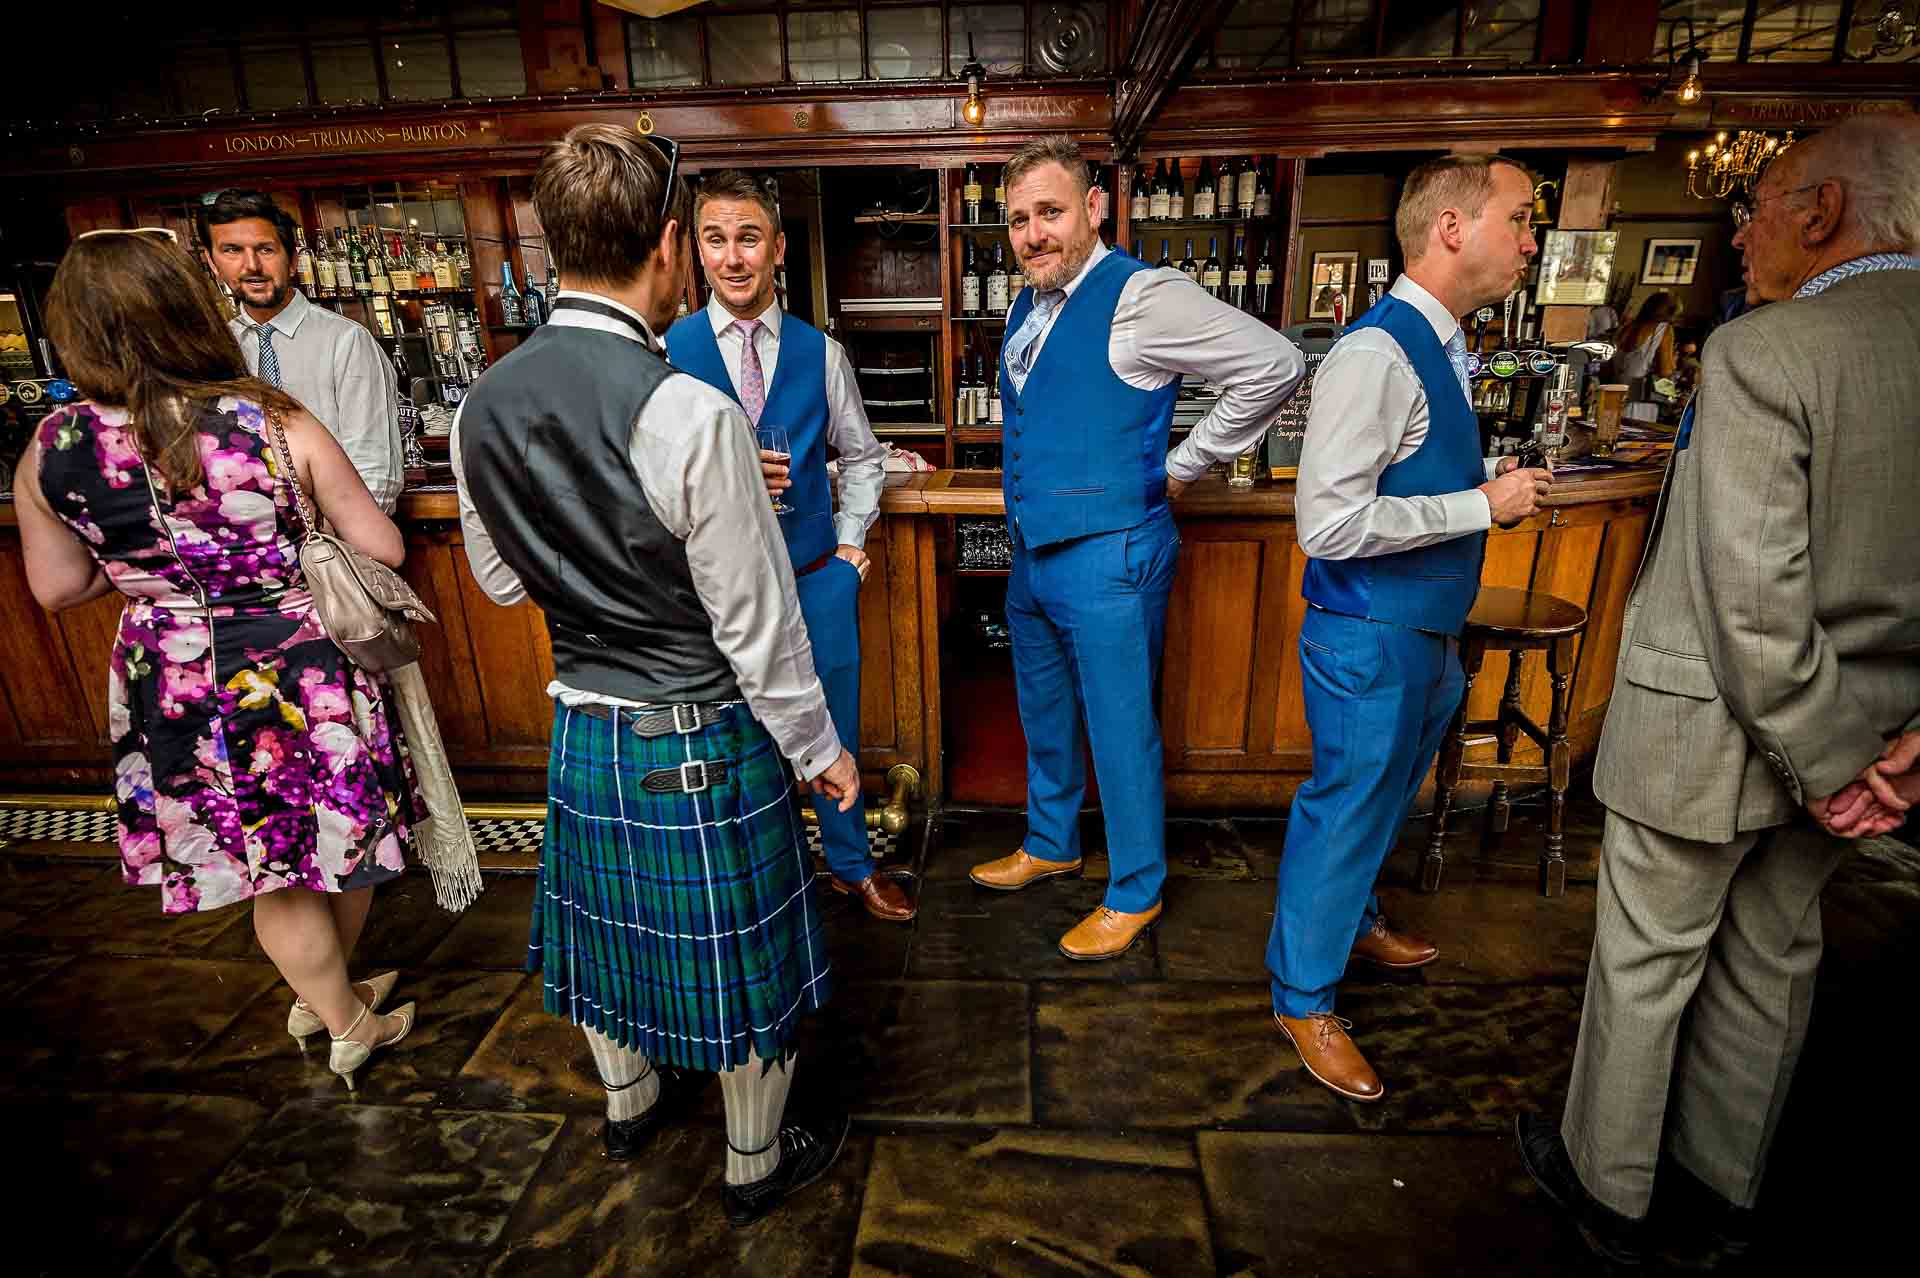 Groomsmen and wedding guests in pub before wedding